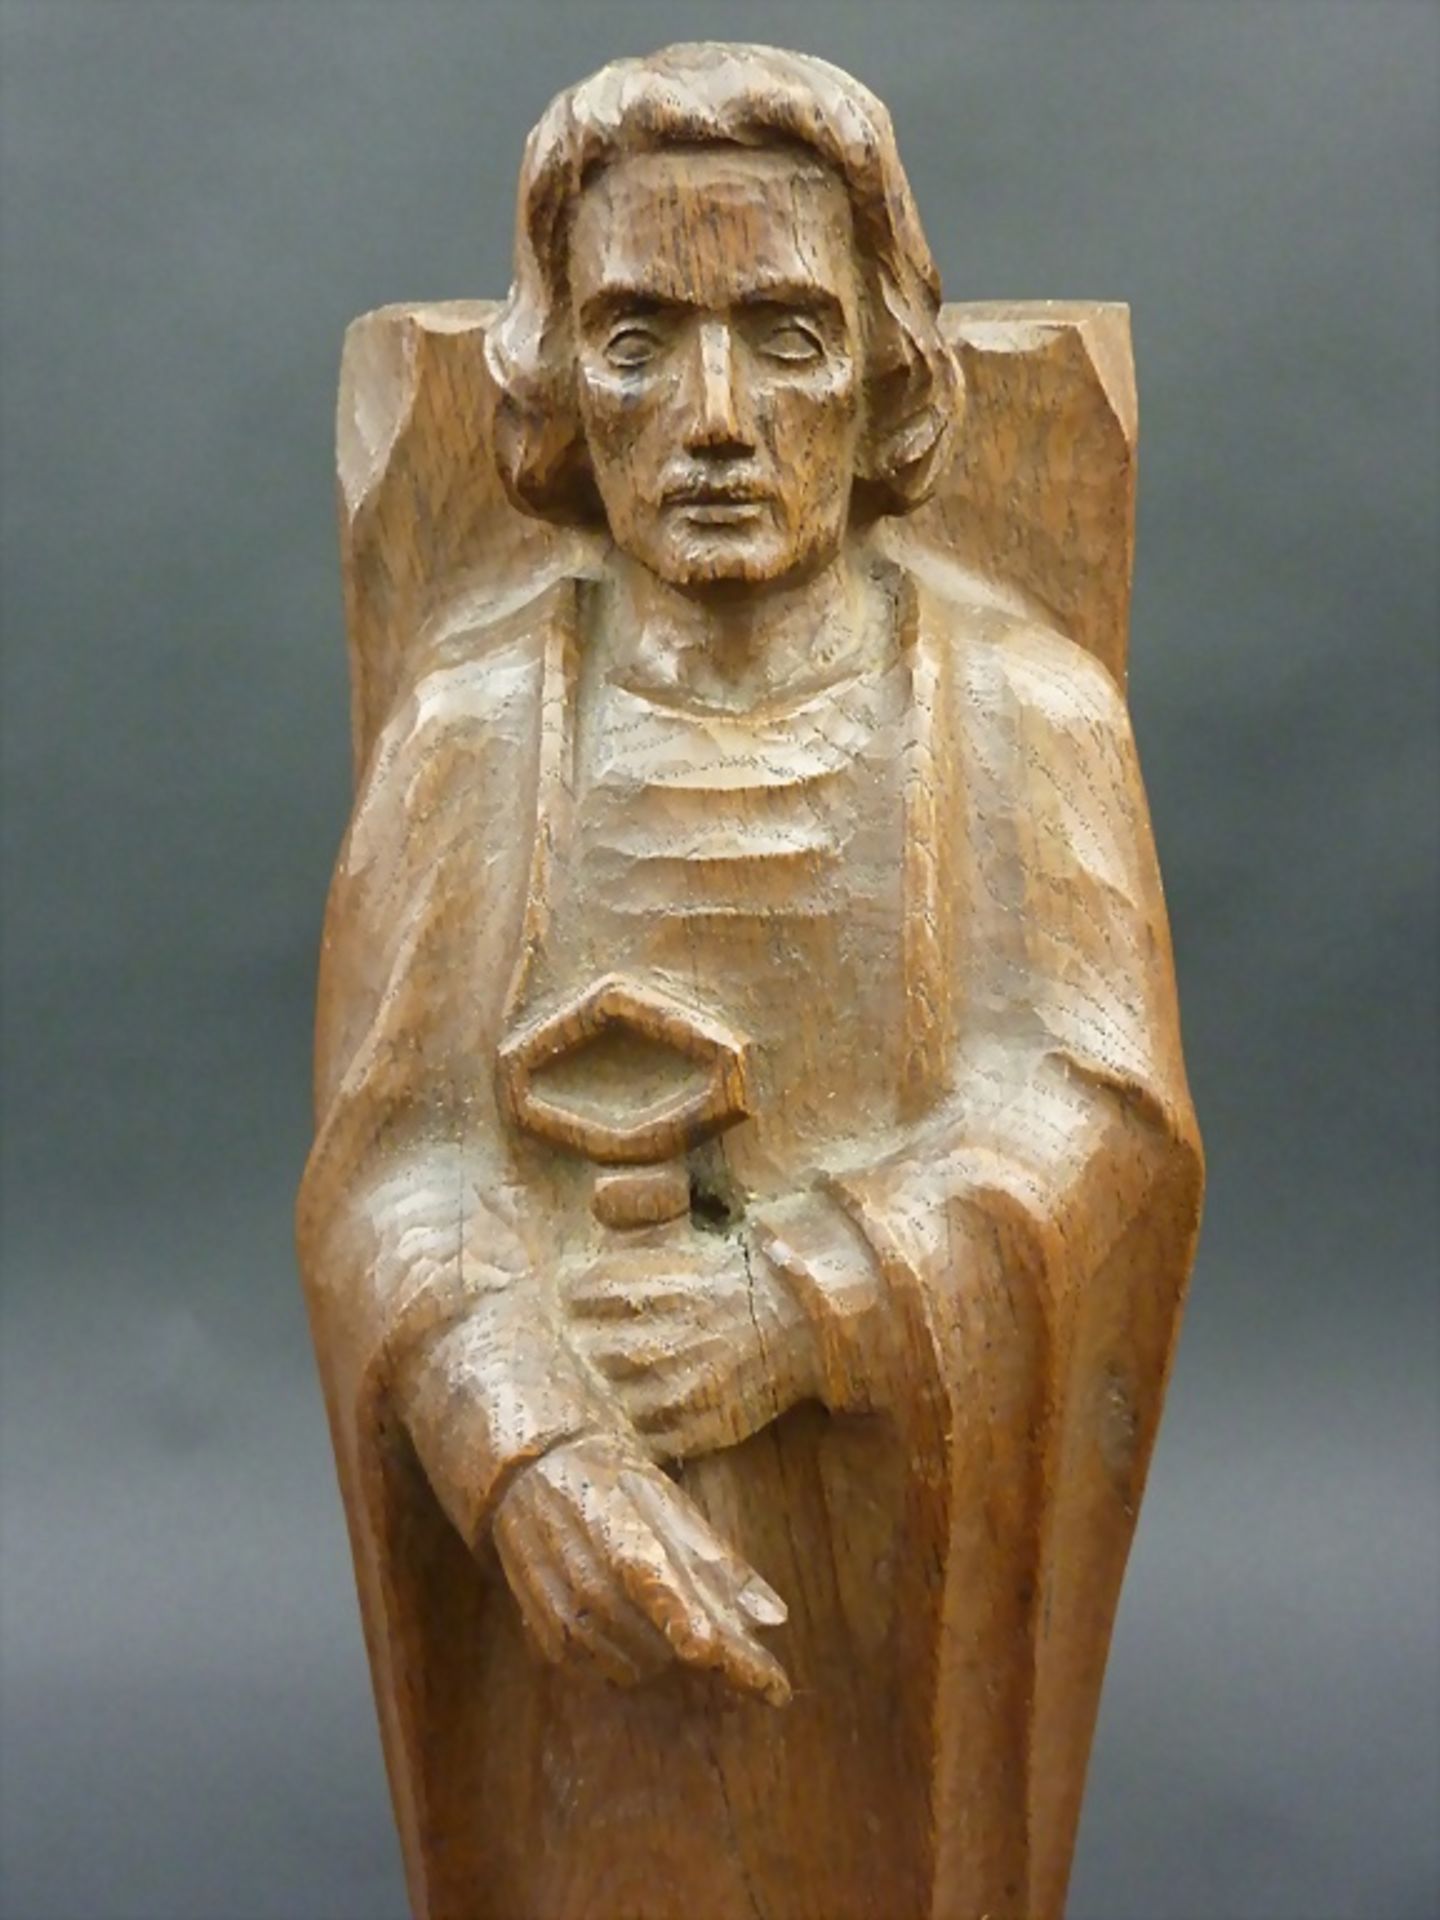 Holz-Skulptur 'Heiliger Apostel Petrus - Der Fels' / Wooden sculpture 'Holy Apostle Peter - ... - Bild 5 aus 12